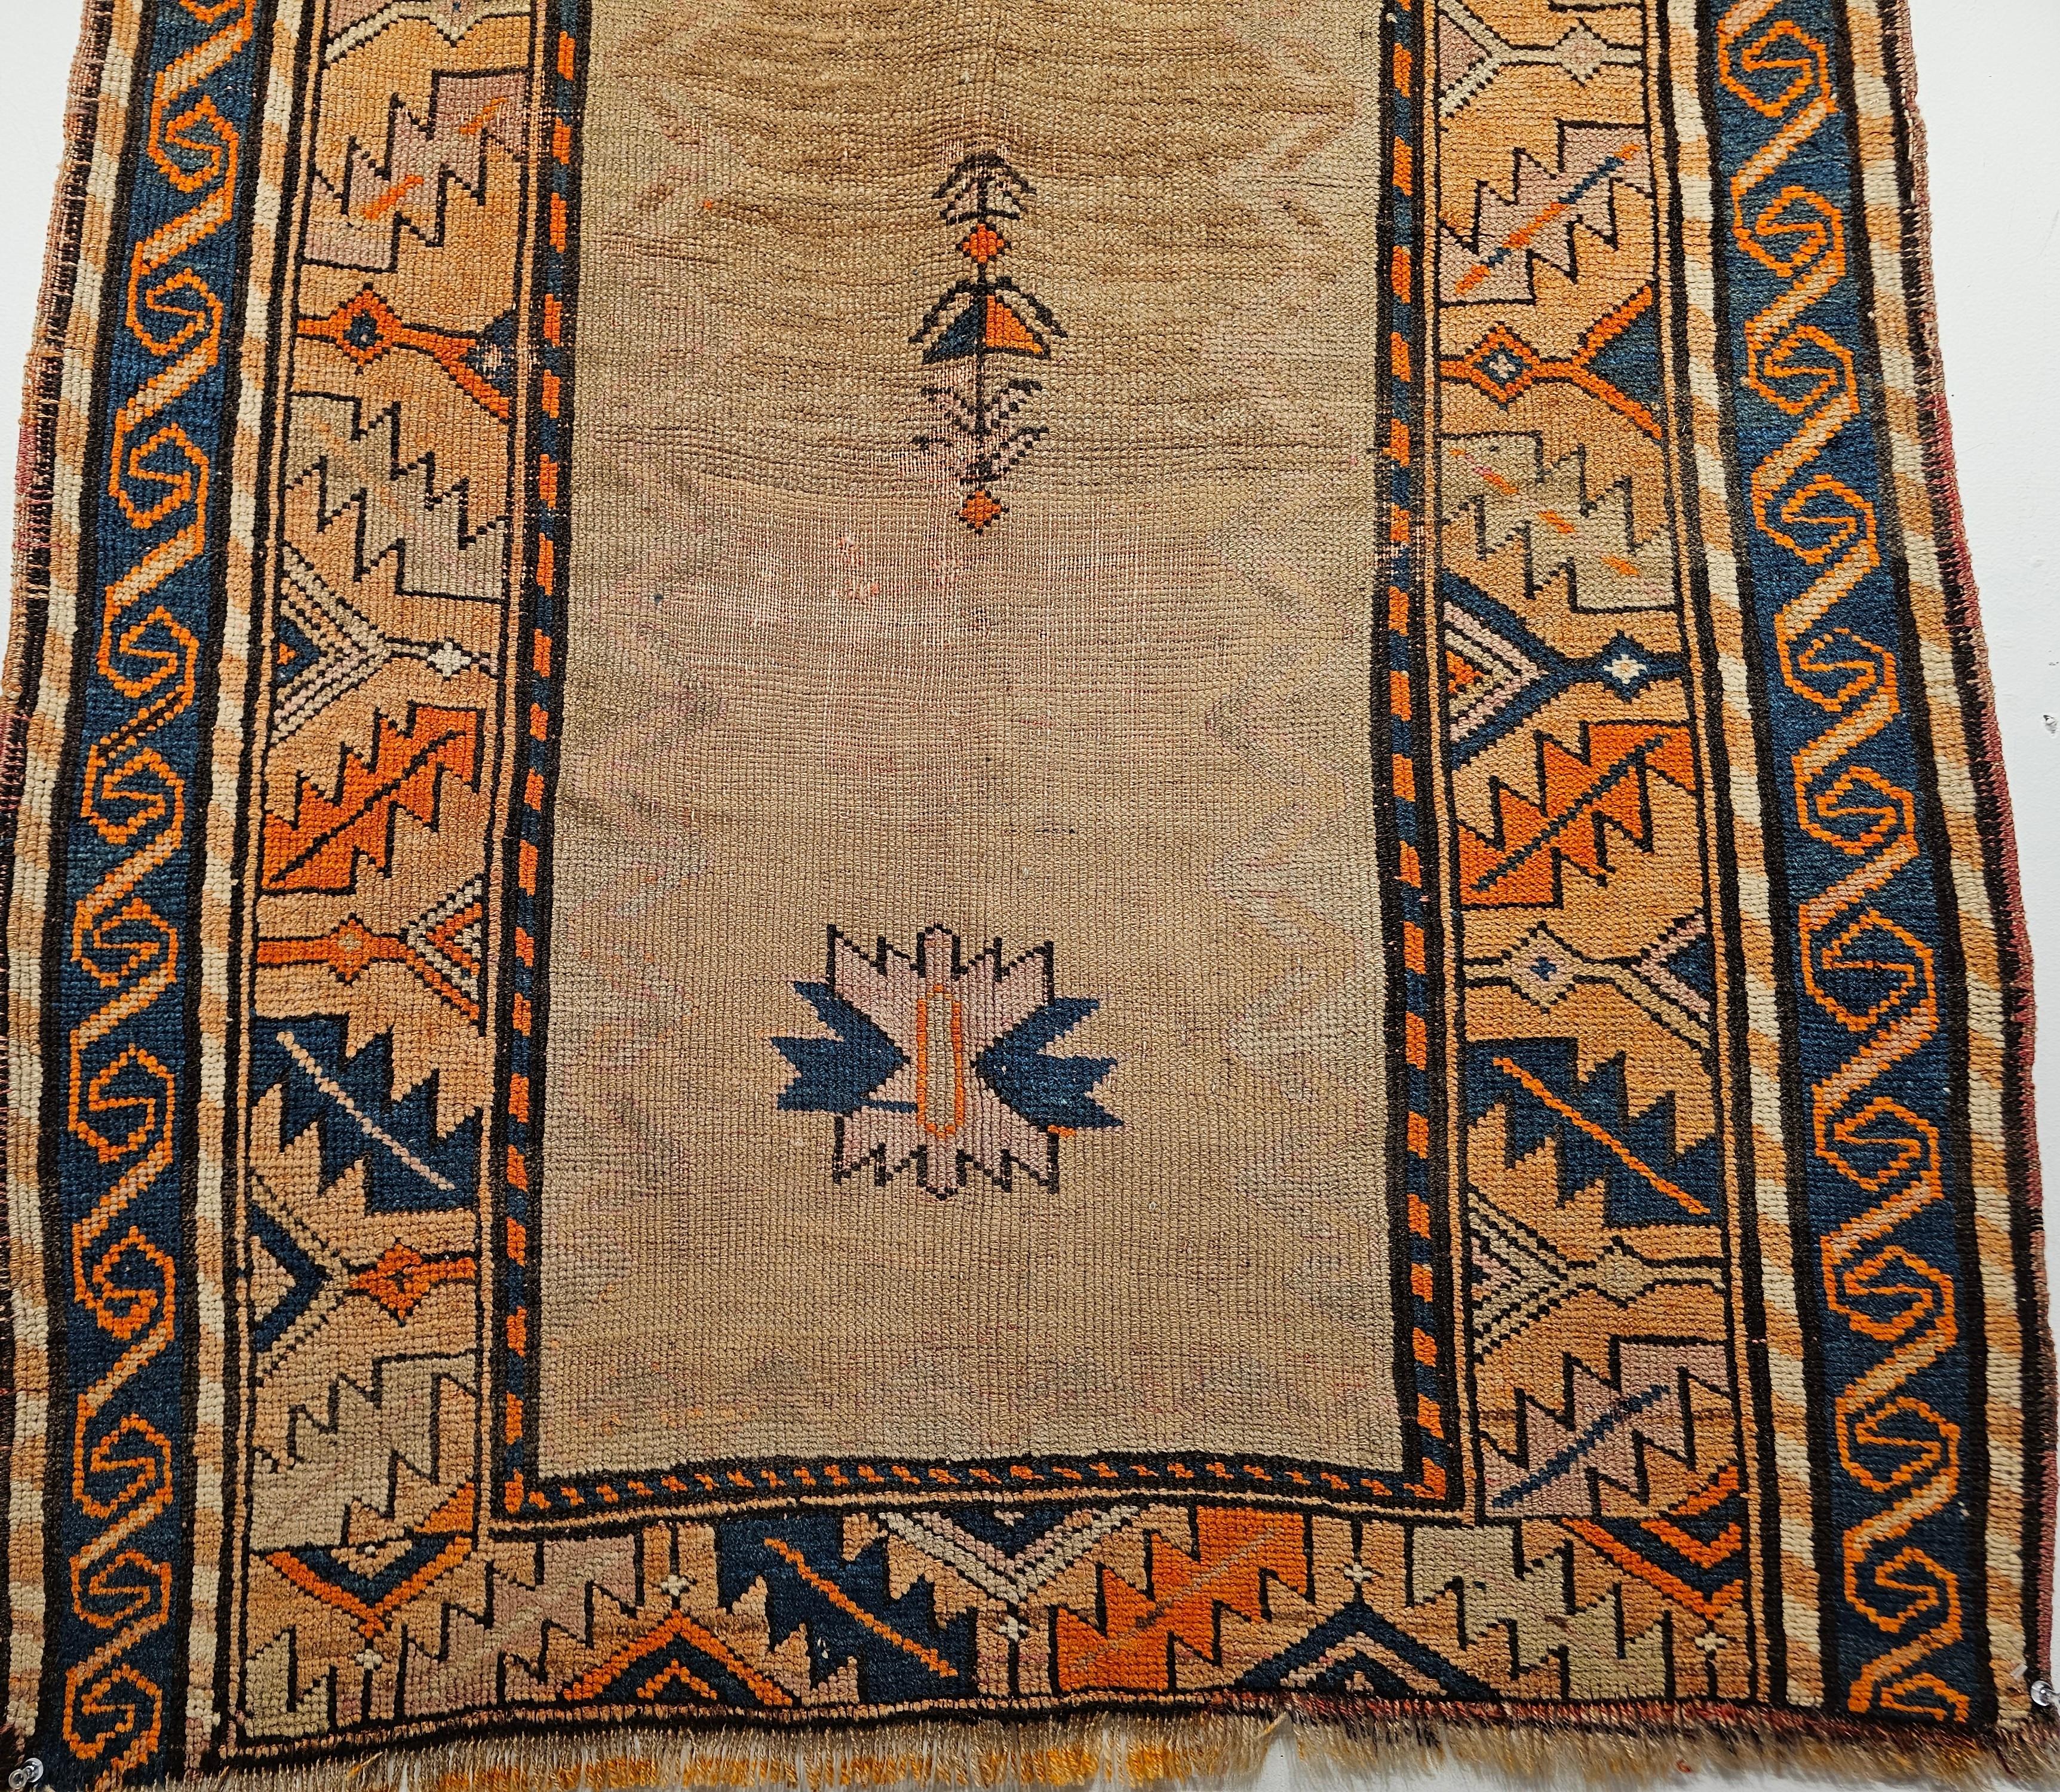 Hand-Woven Vintage Kurdish Area Rug in Prayer Pattern in Camelhair, Brick, Navy, Lavender For Sale